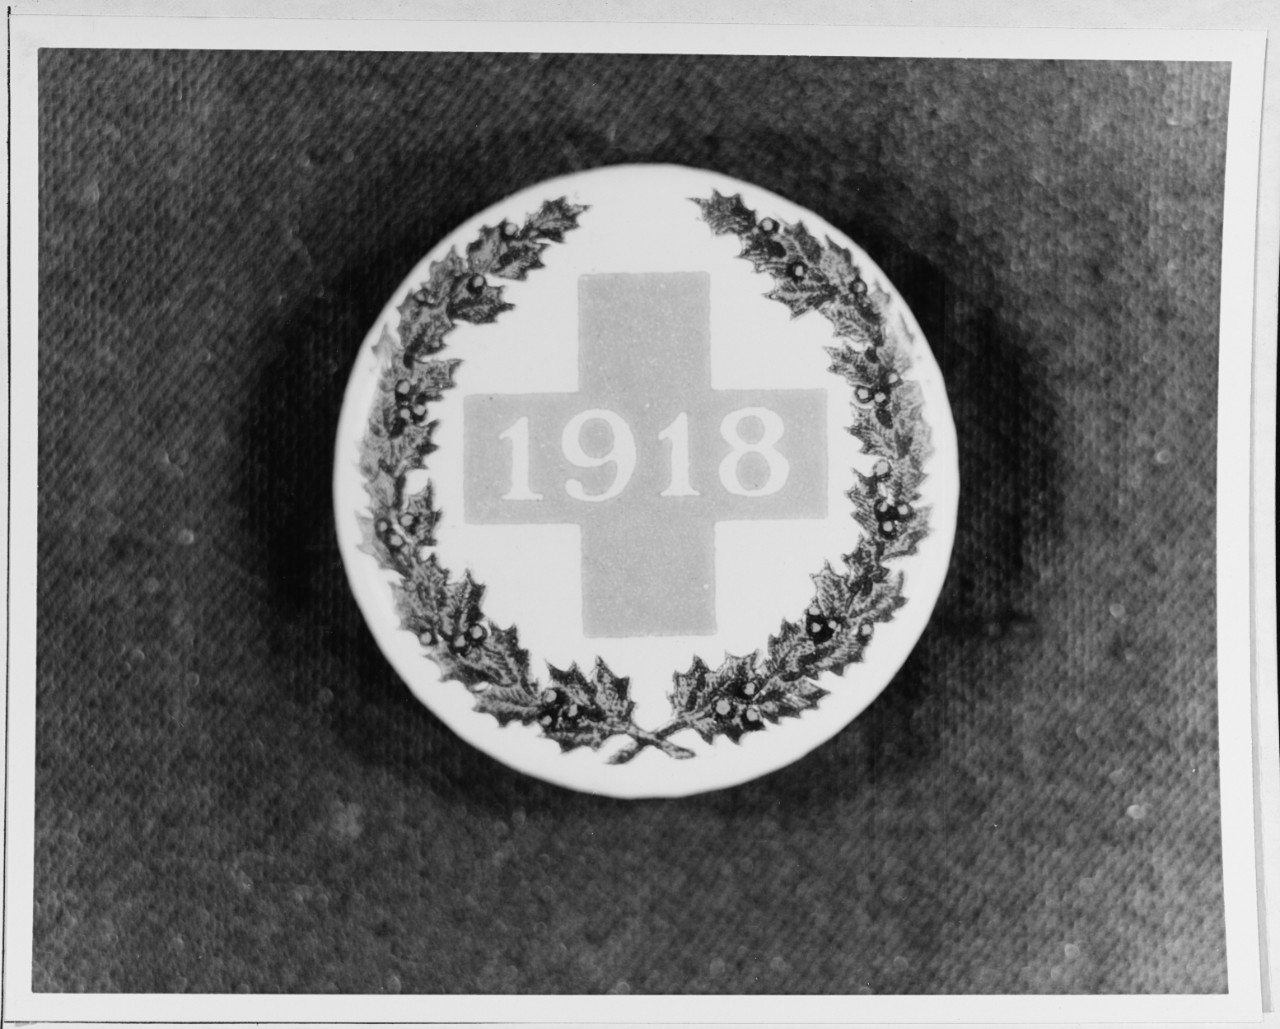 1918 Red Cross pin